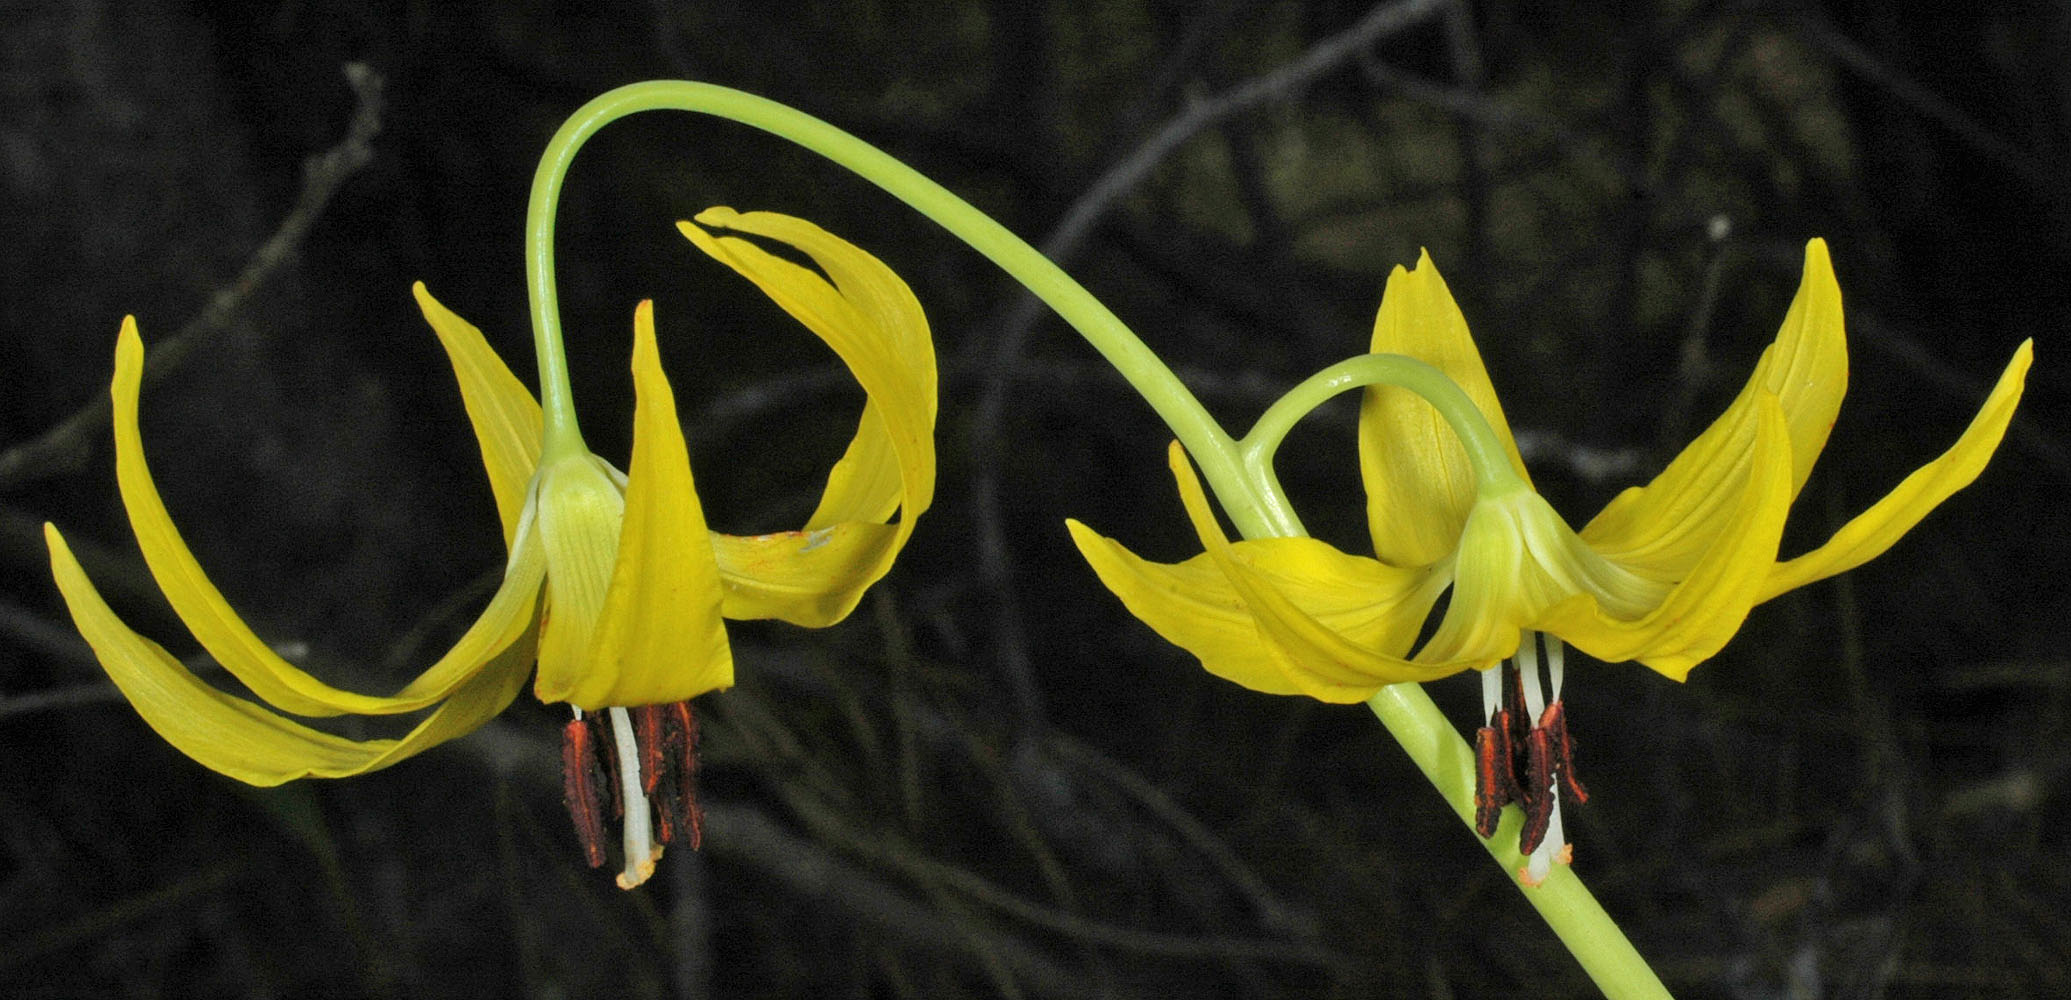 Flora of Eastern Washington Image: Erythronium grandiflorum